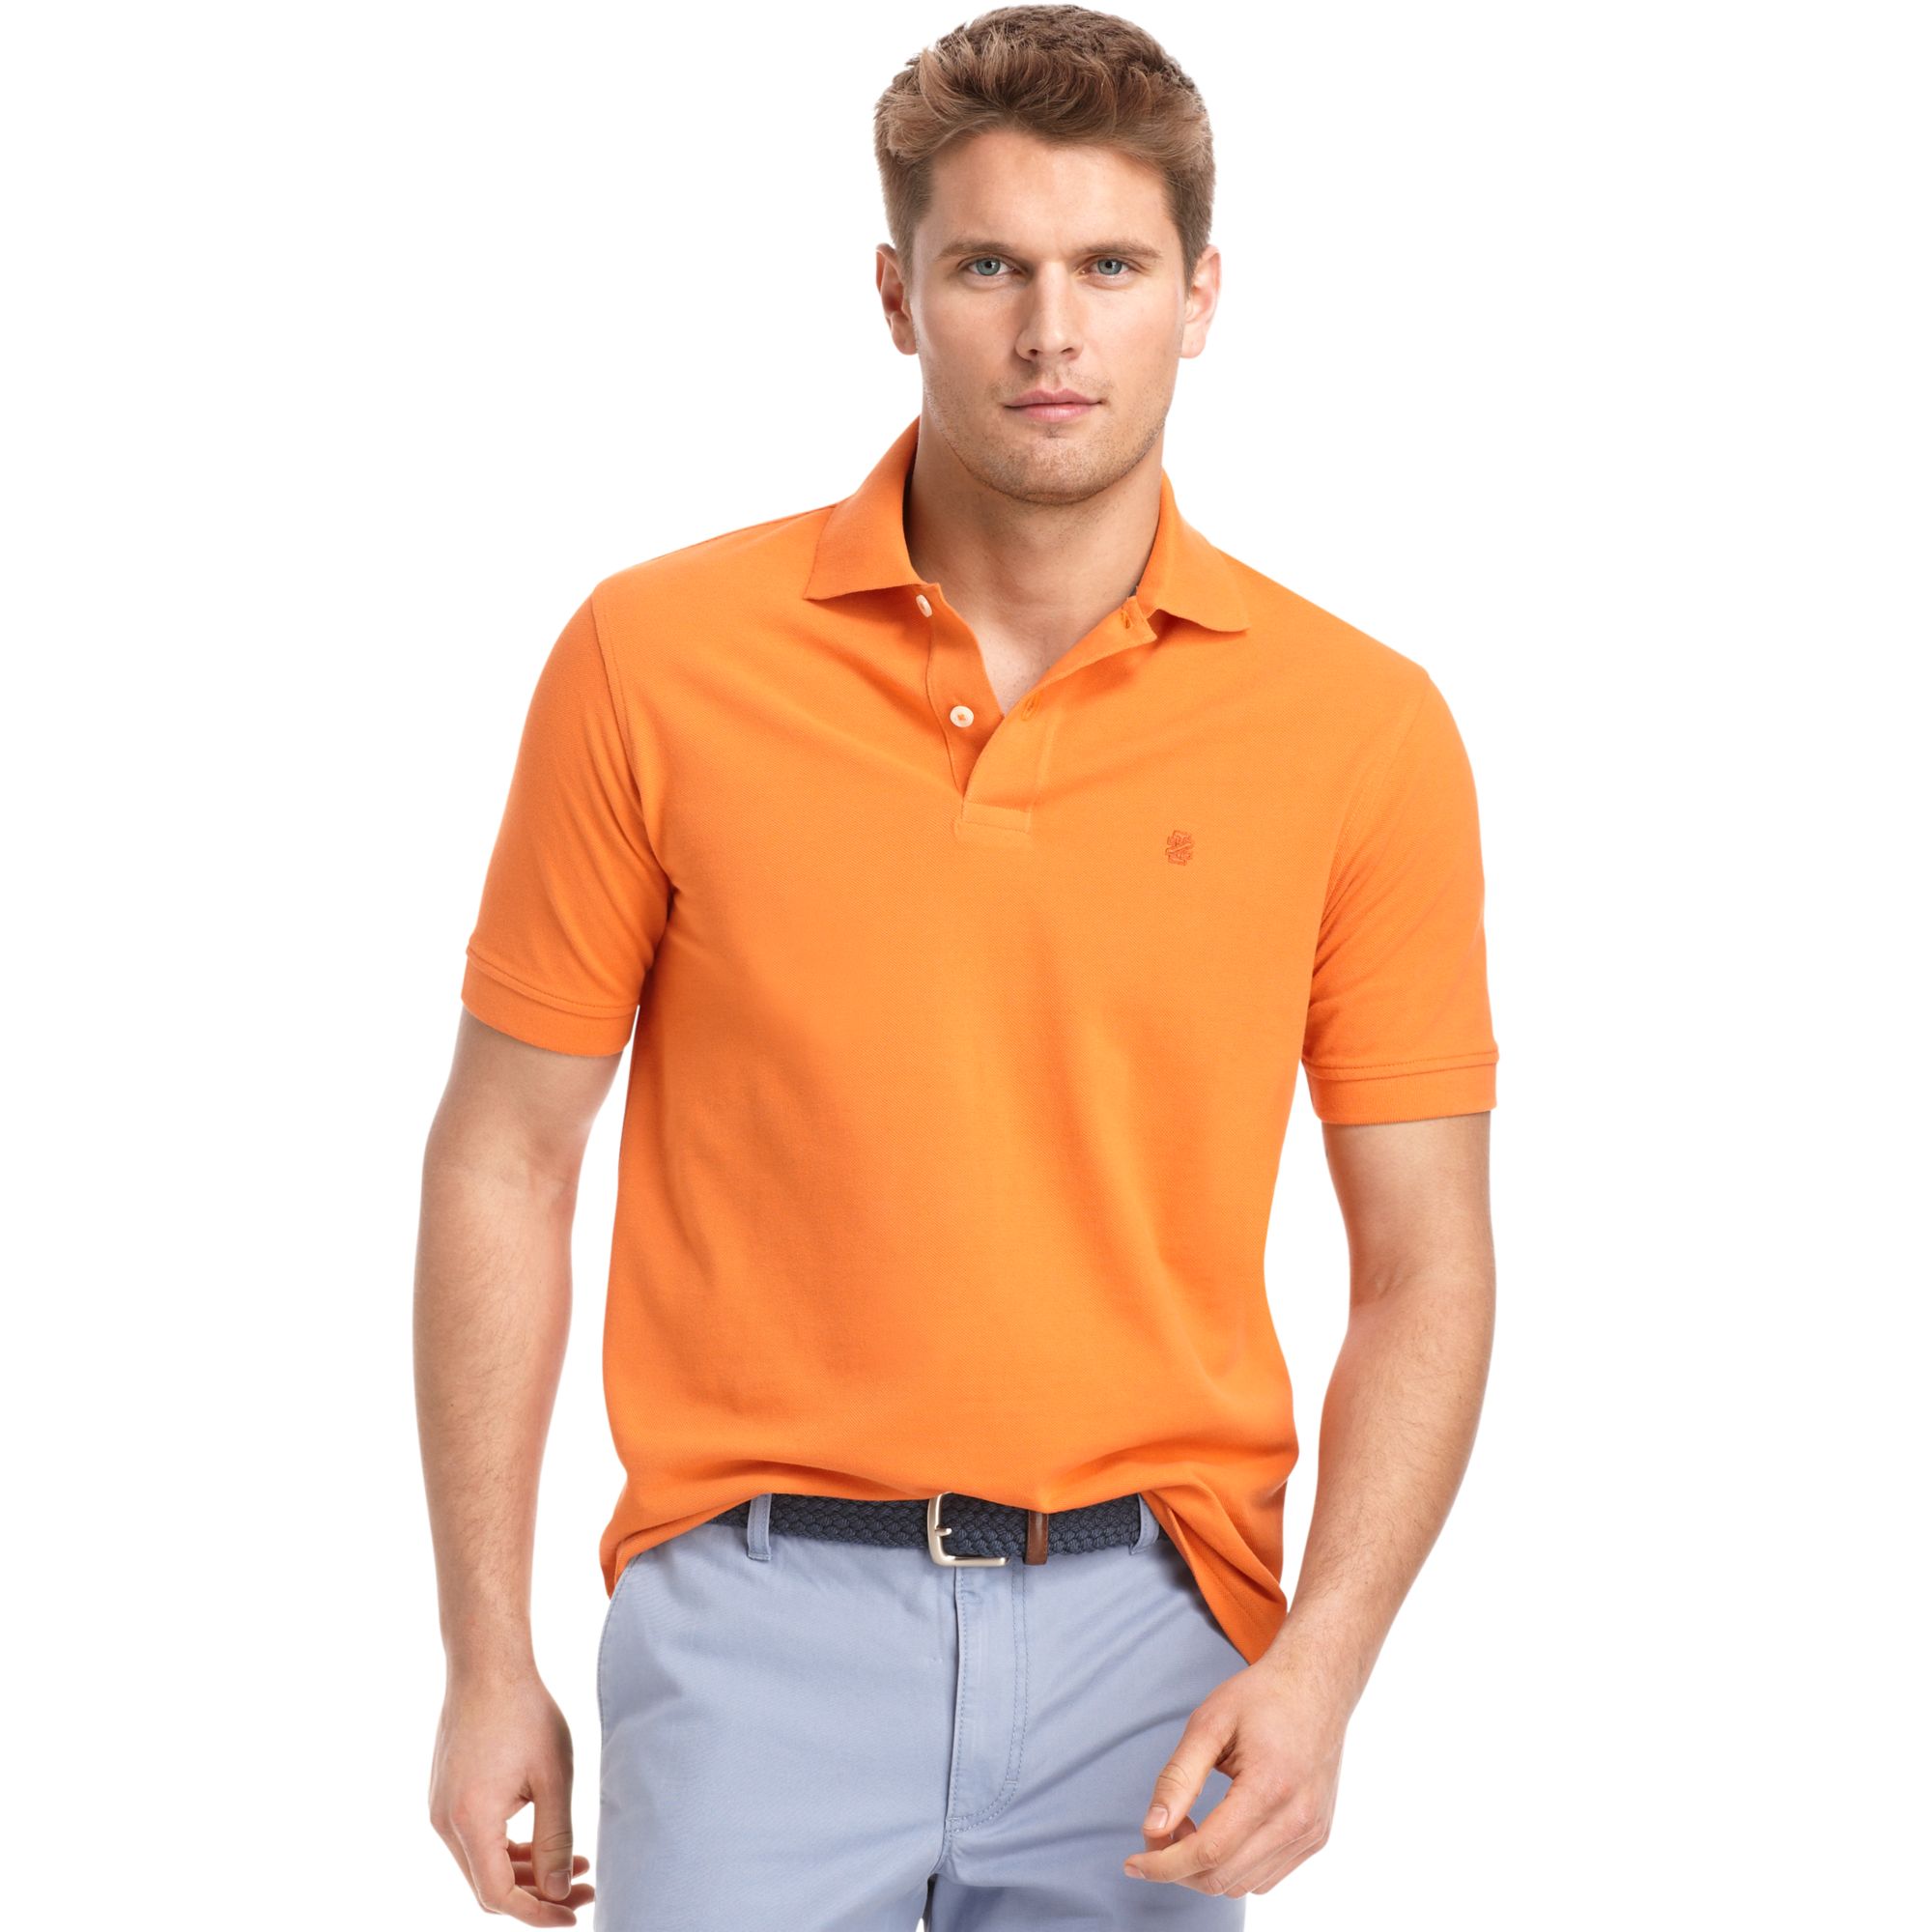 Lyst - Izod Shirt Premium Pique Polo Shirt in Orange for Men